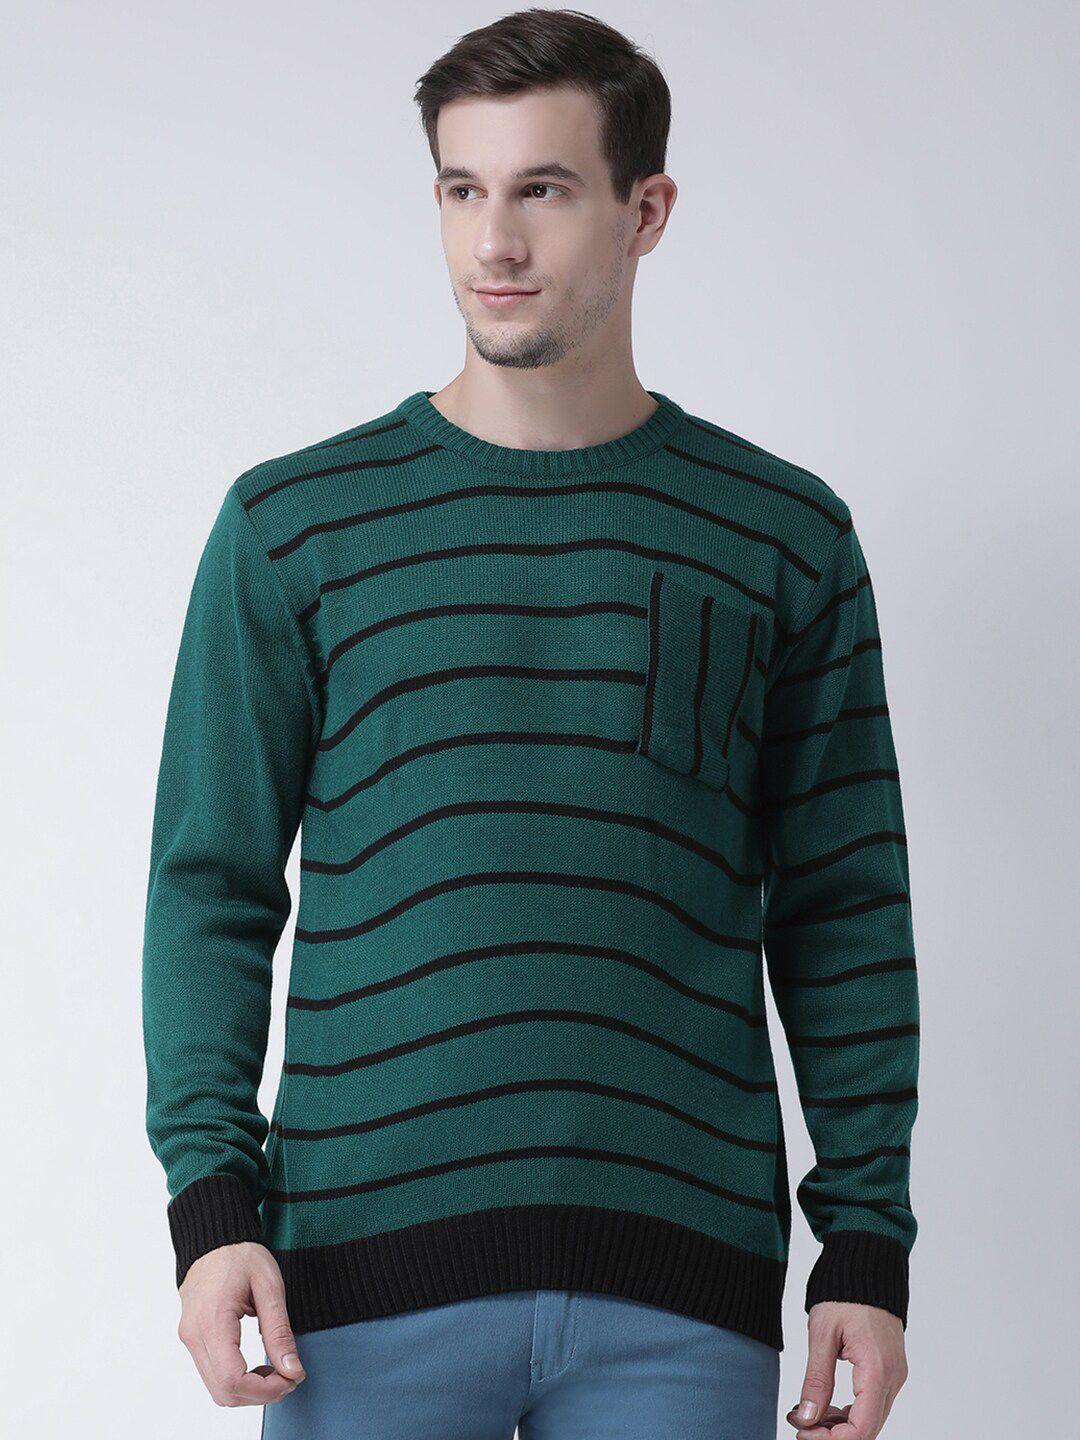 club york men teal & black striped acrylic pullover sweater